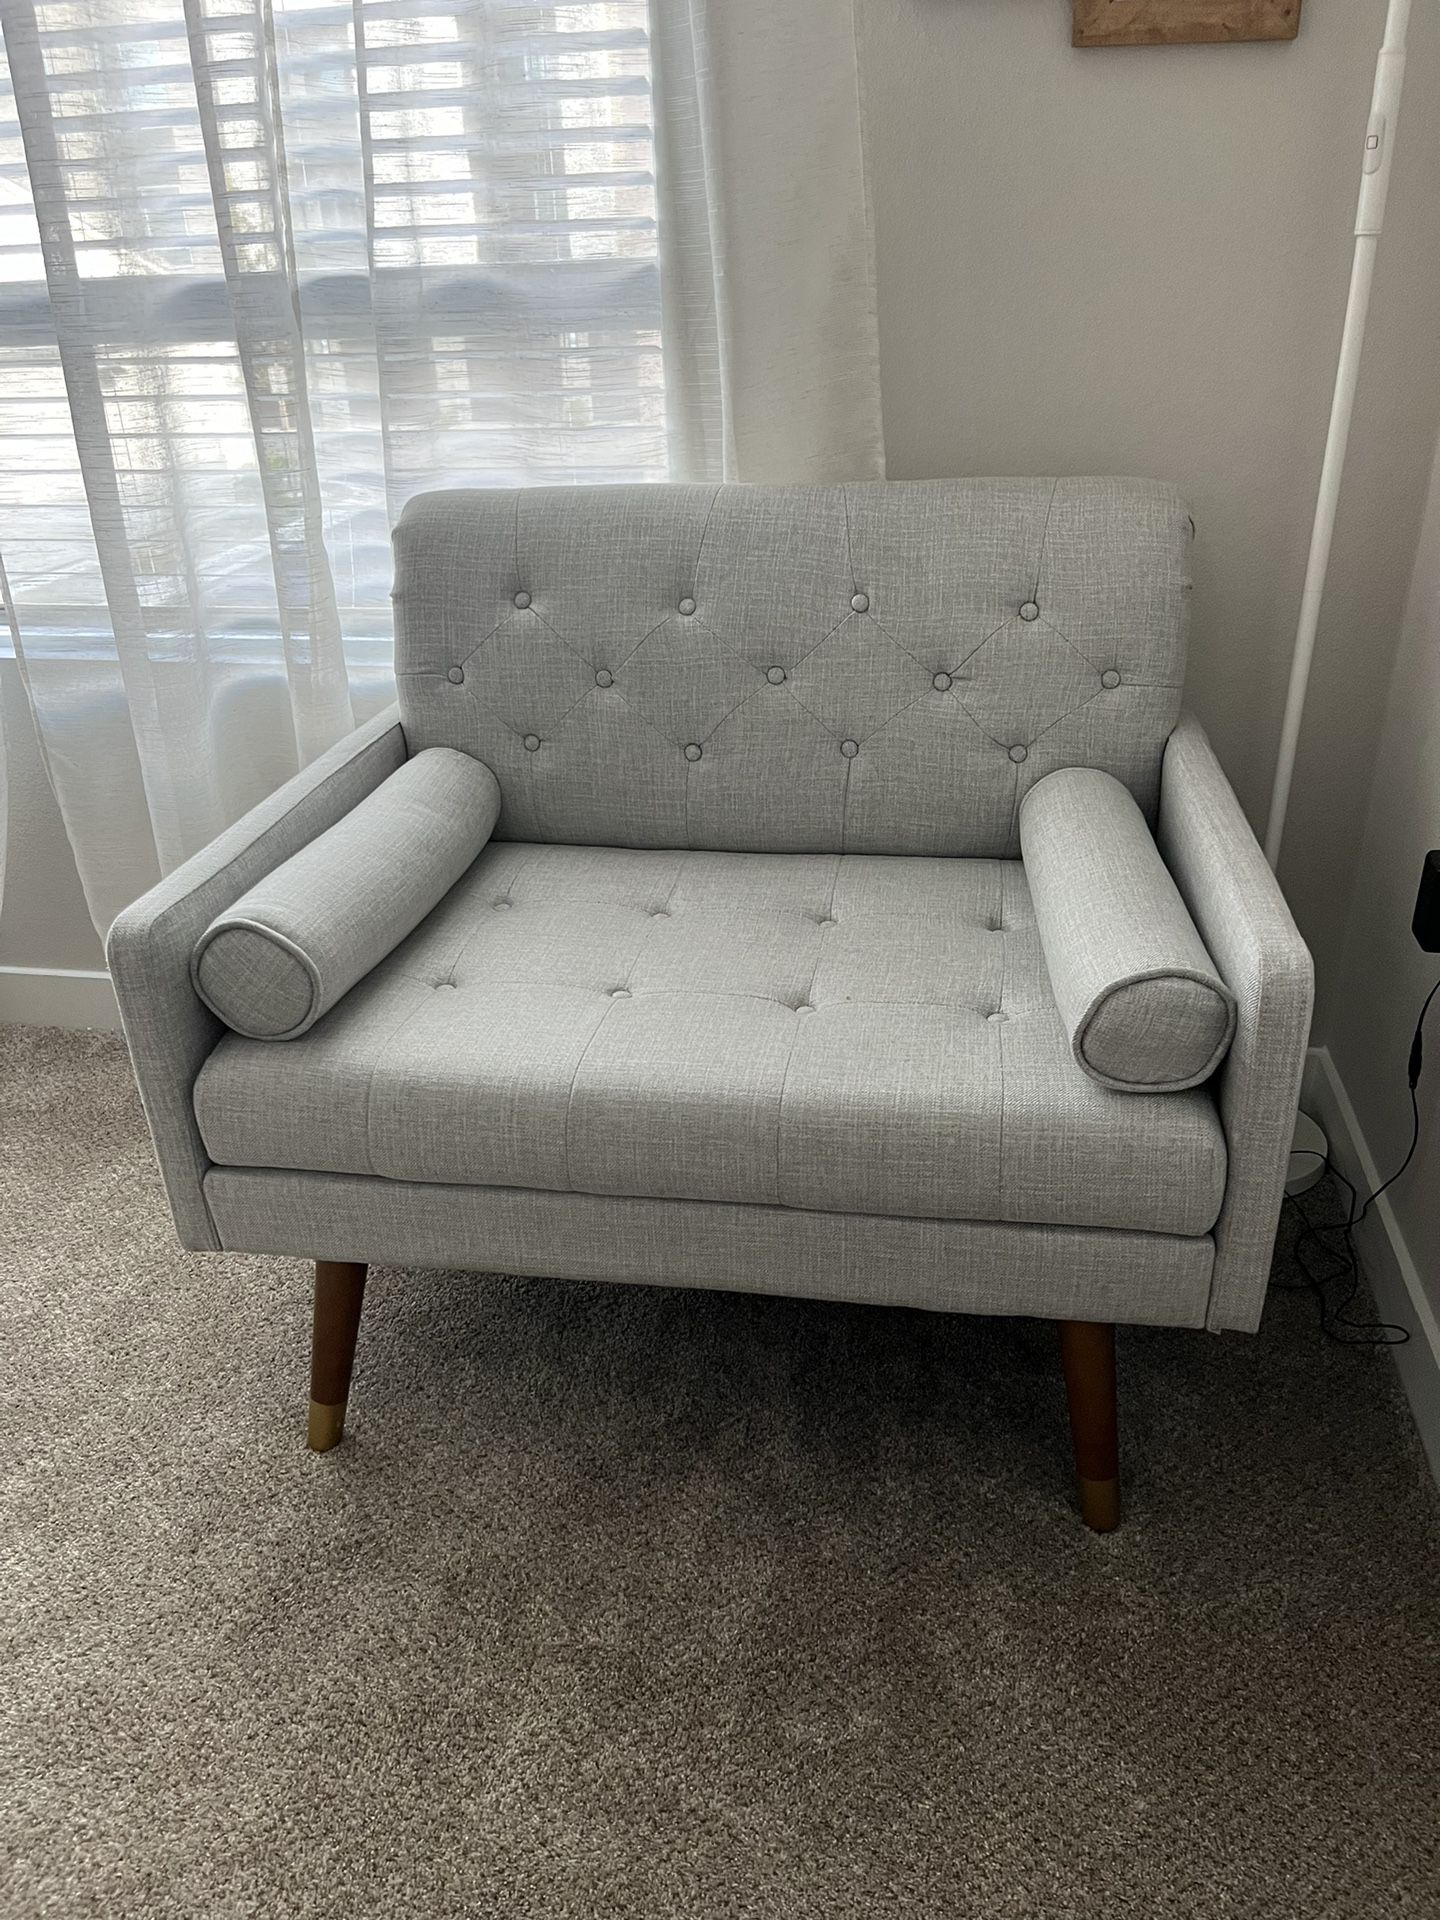 Gray armchair